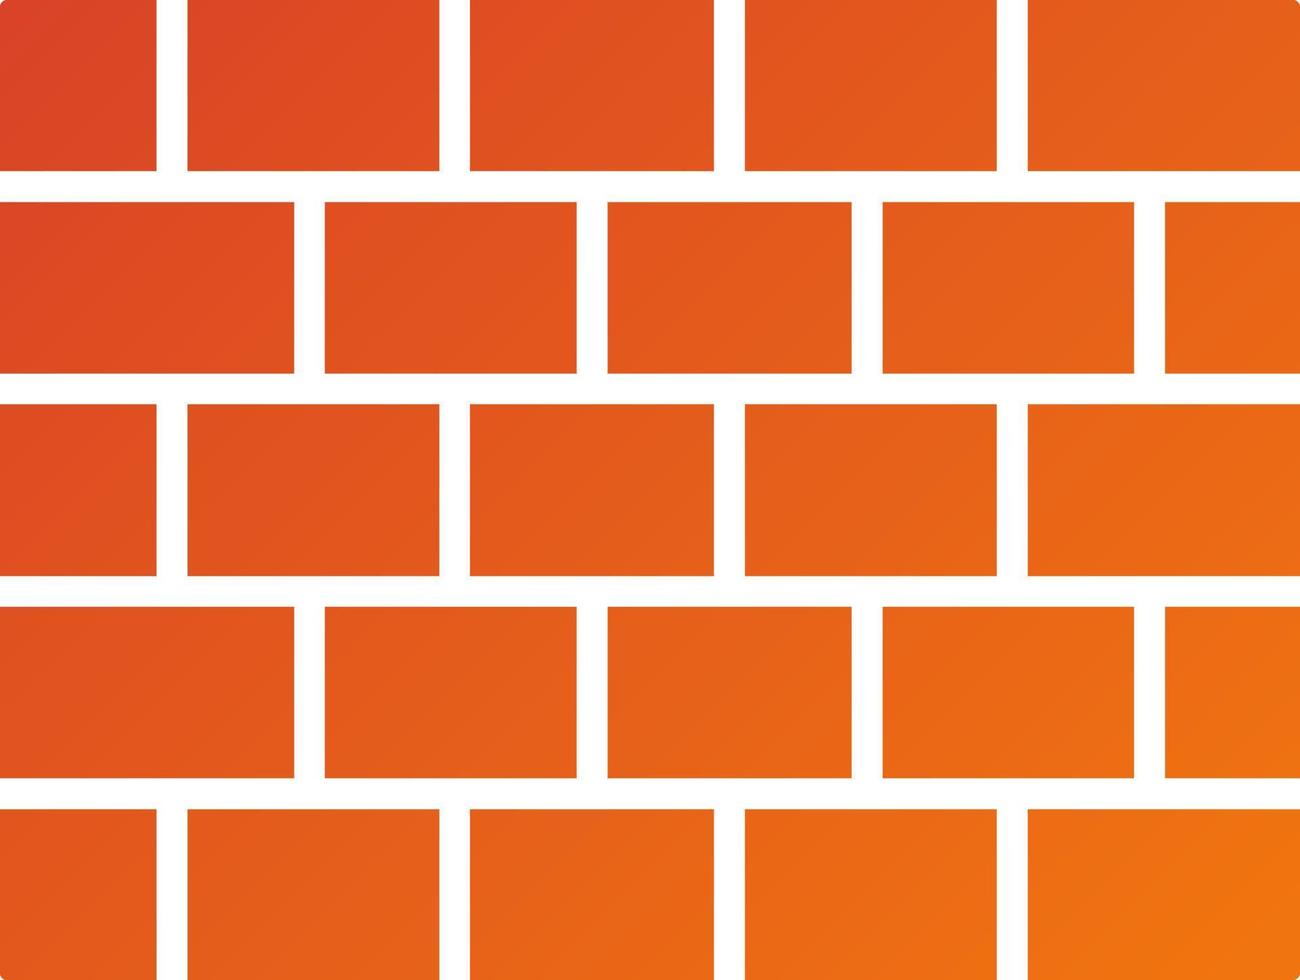 Brick Wall Icon Style vector